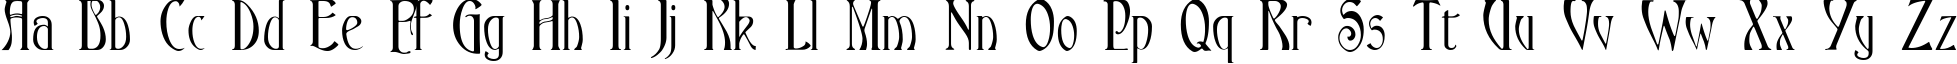 Пример написания английского алфавита шрифтом Ambrosia